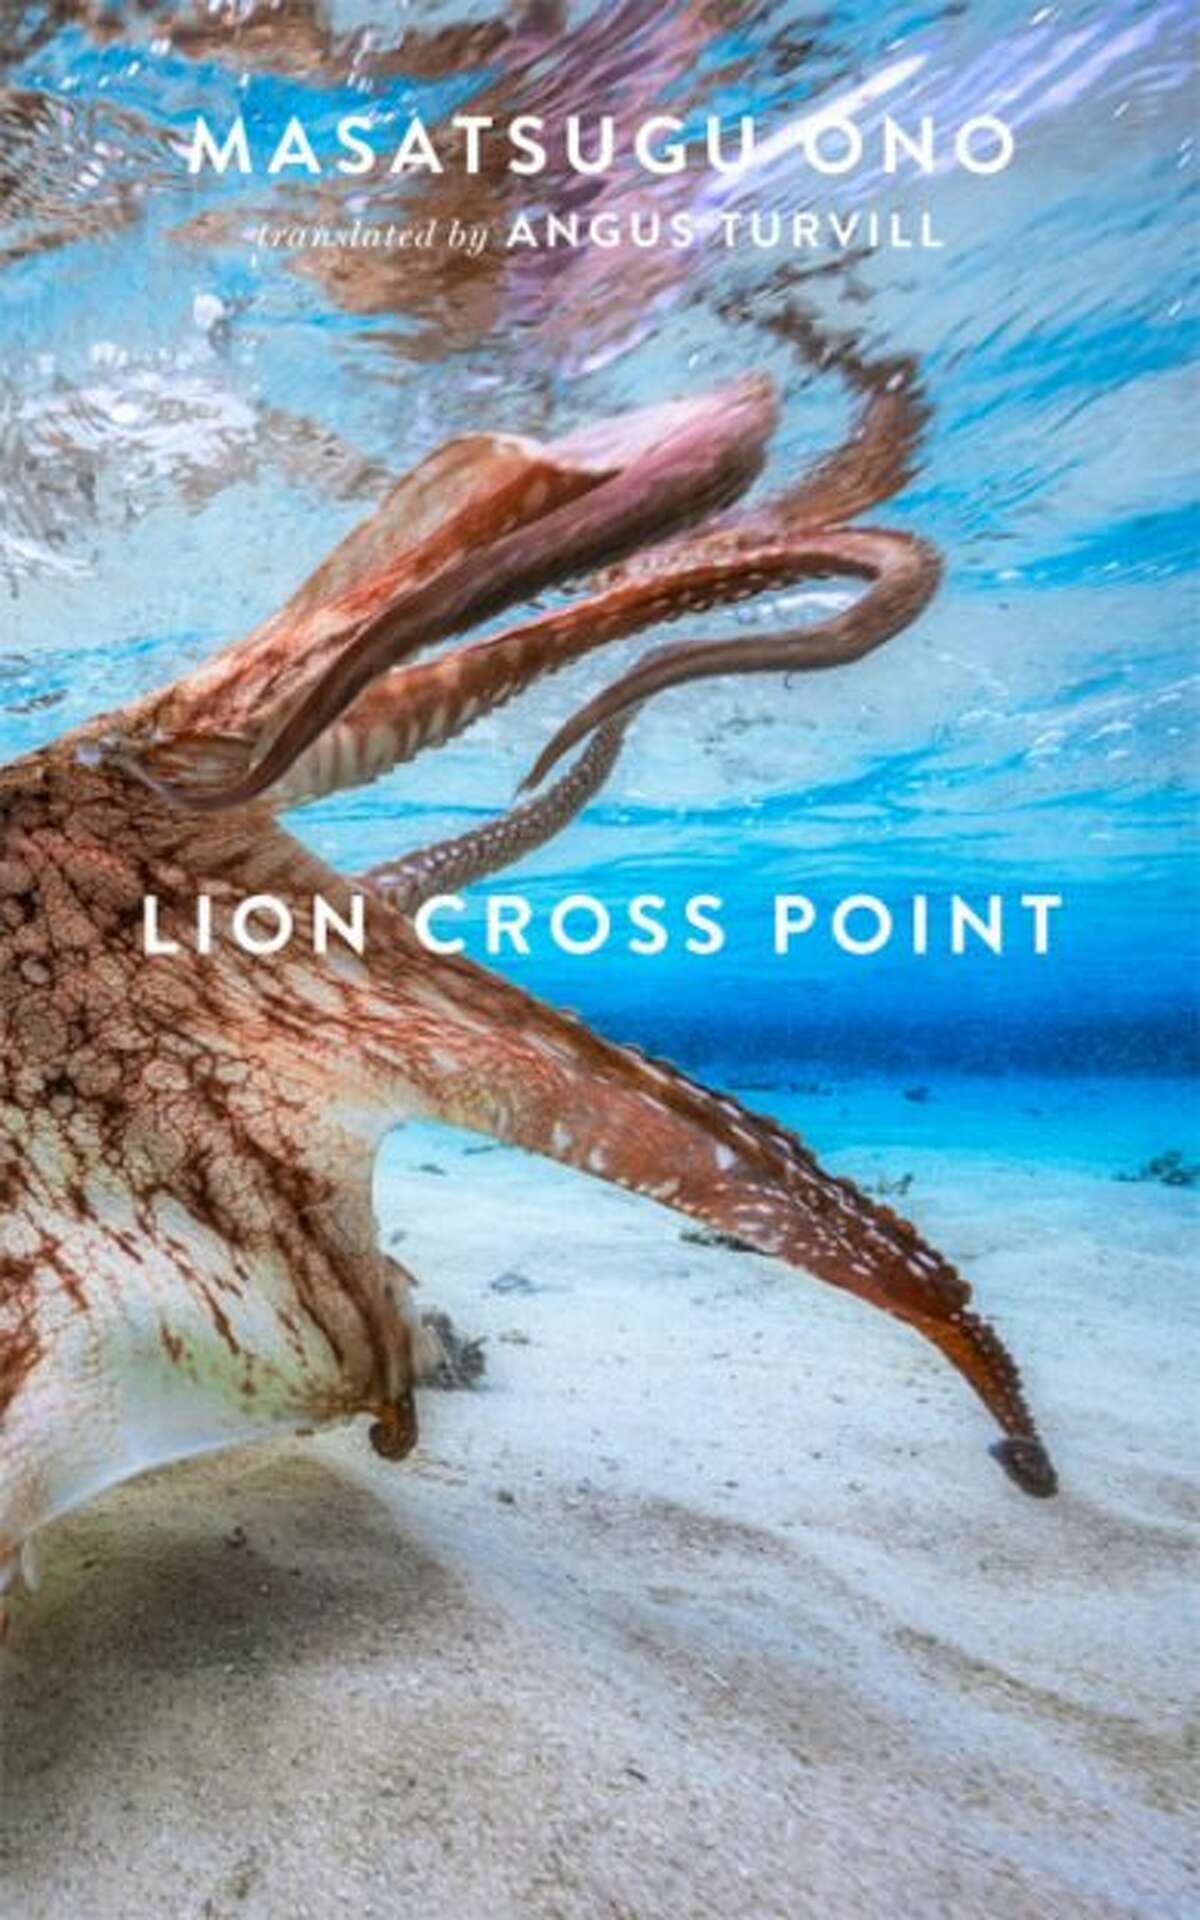 "Lion Cross Point"